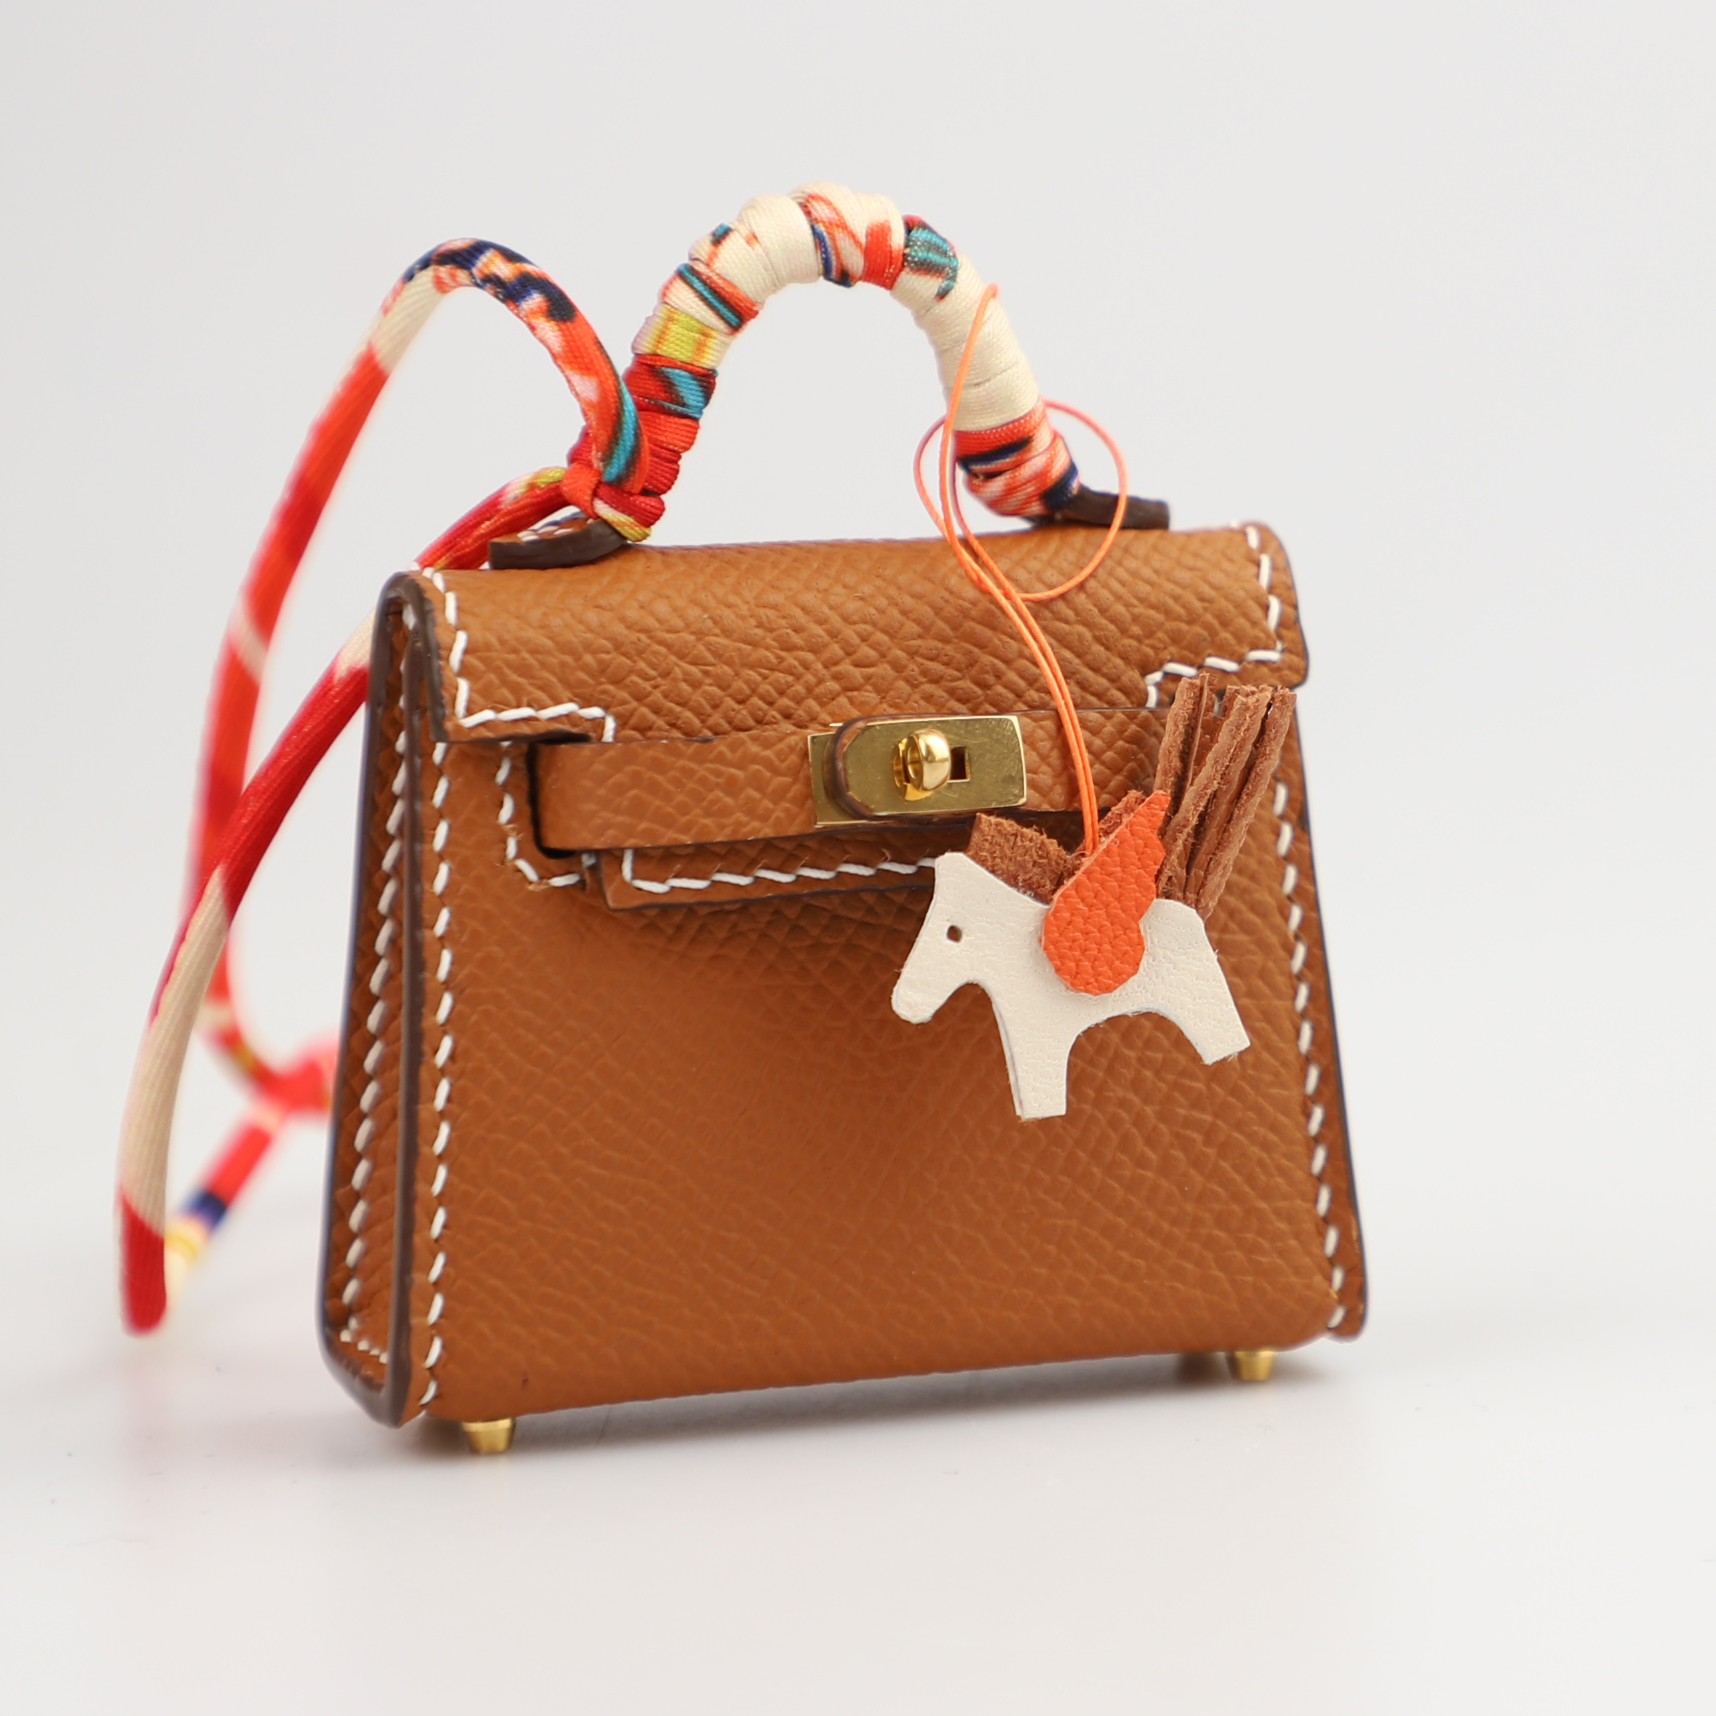 Hand Stitching Epsom Leather Micor kelly bag charm with Rodeo charm,mini birkin bag charm,mini kelly bag key chain